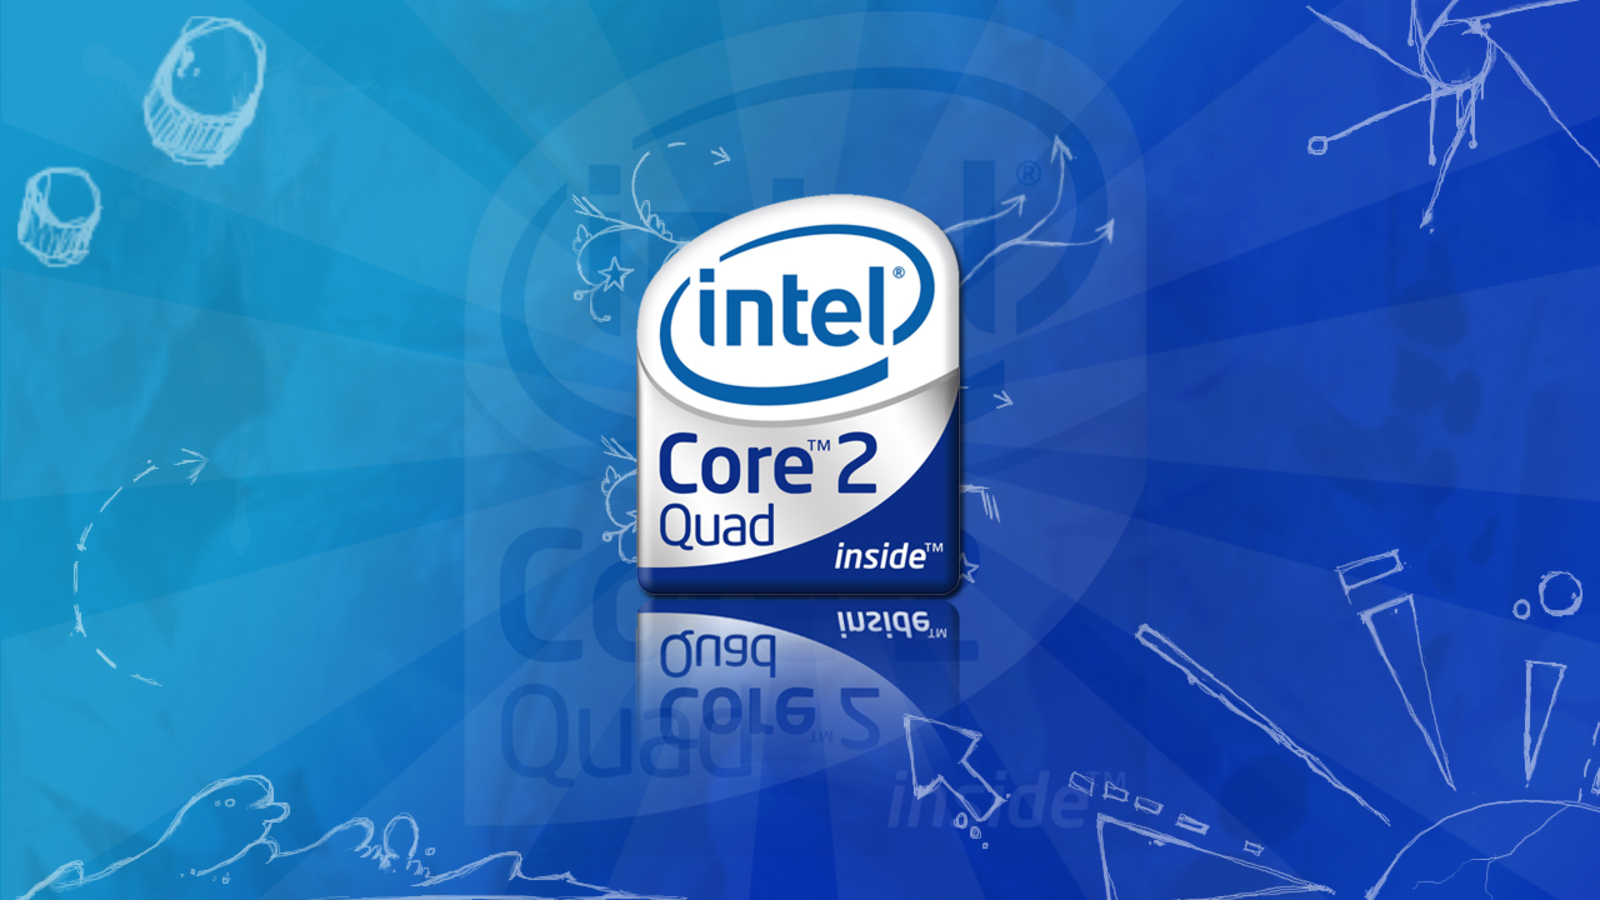 Технологии интел. Intel Core 2 Duo inside. Intel core2 Quad логотип. Intel Core 2 Duo обои. Интел 2 дуо.